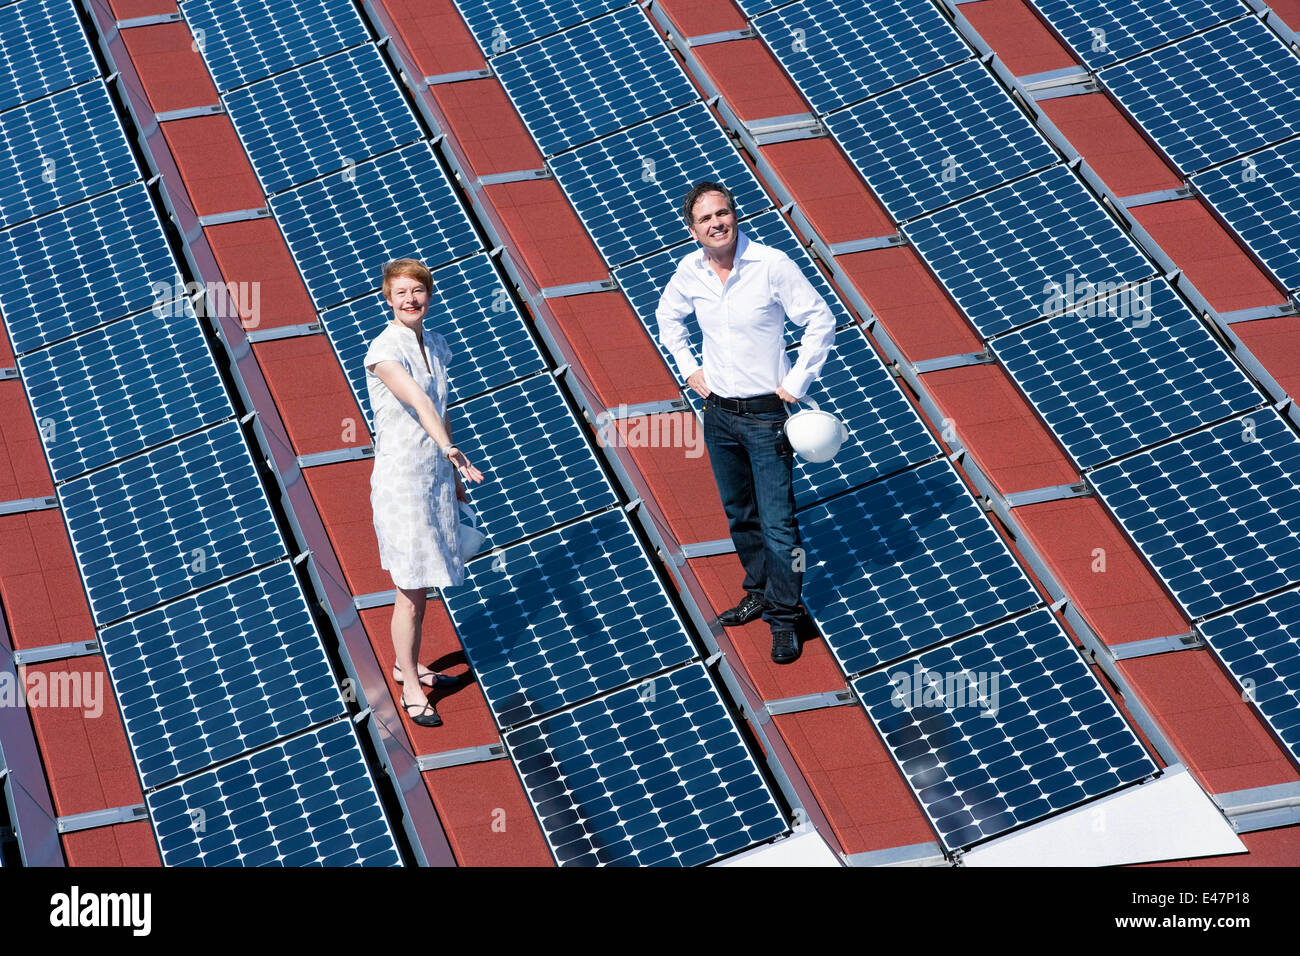 Solar panels on the Friedrichstadt Palace Stock Photo